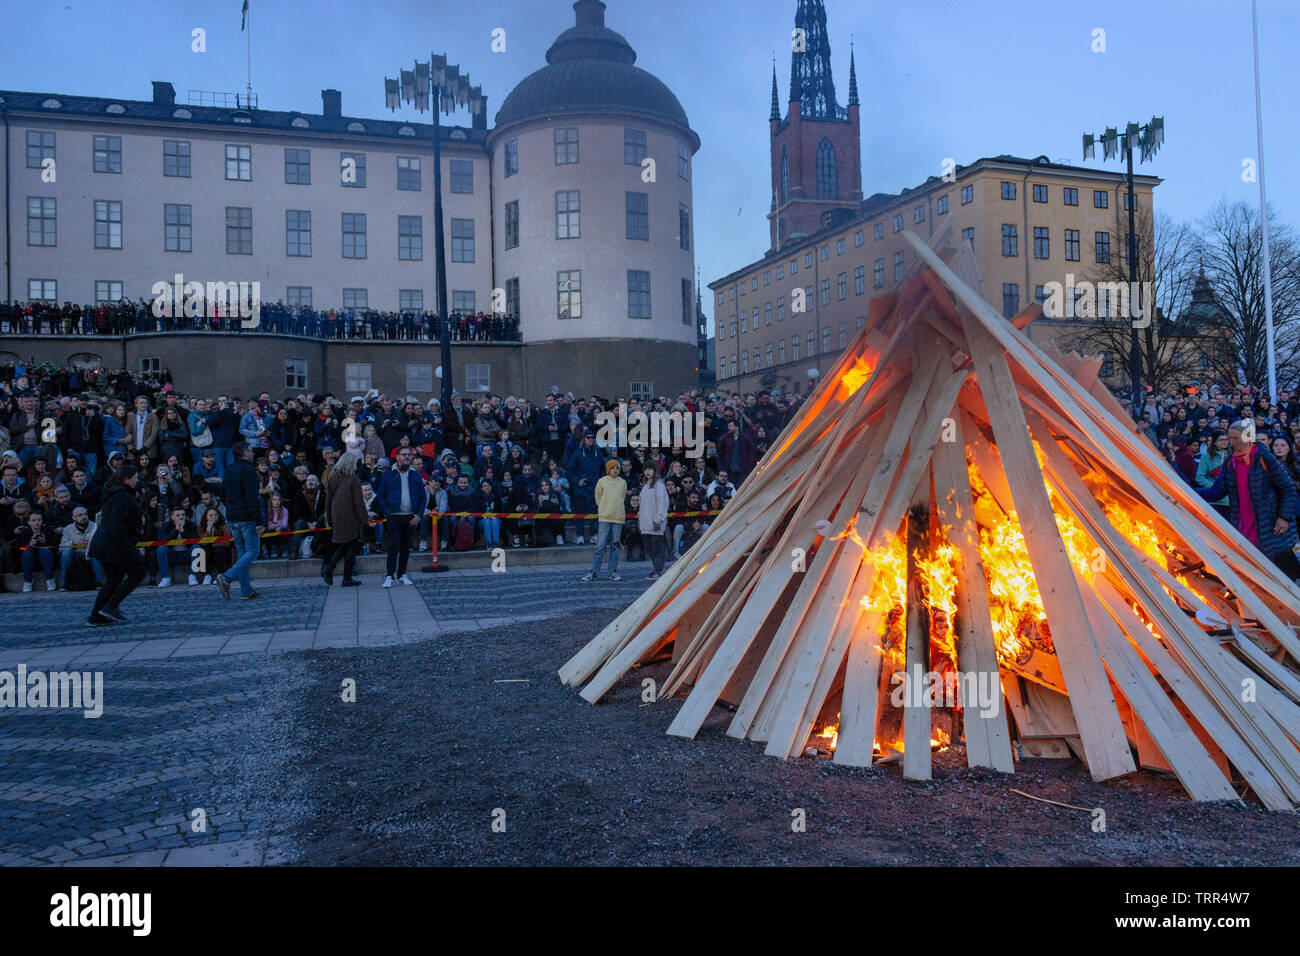 Burning wood pile and crowds in front of Wrangel Palace celebrating Mayday eve old custom (St. Walpurgis). Riddarholmen, Gamla Stan, Stockholm, Sweden Stock Photo